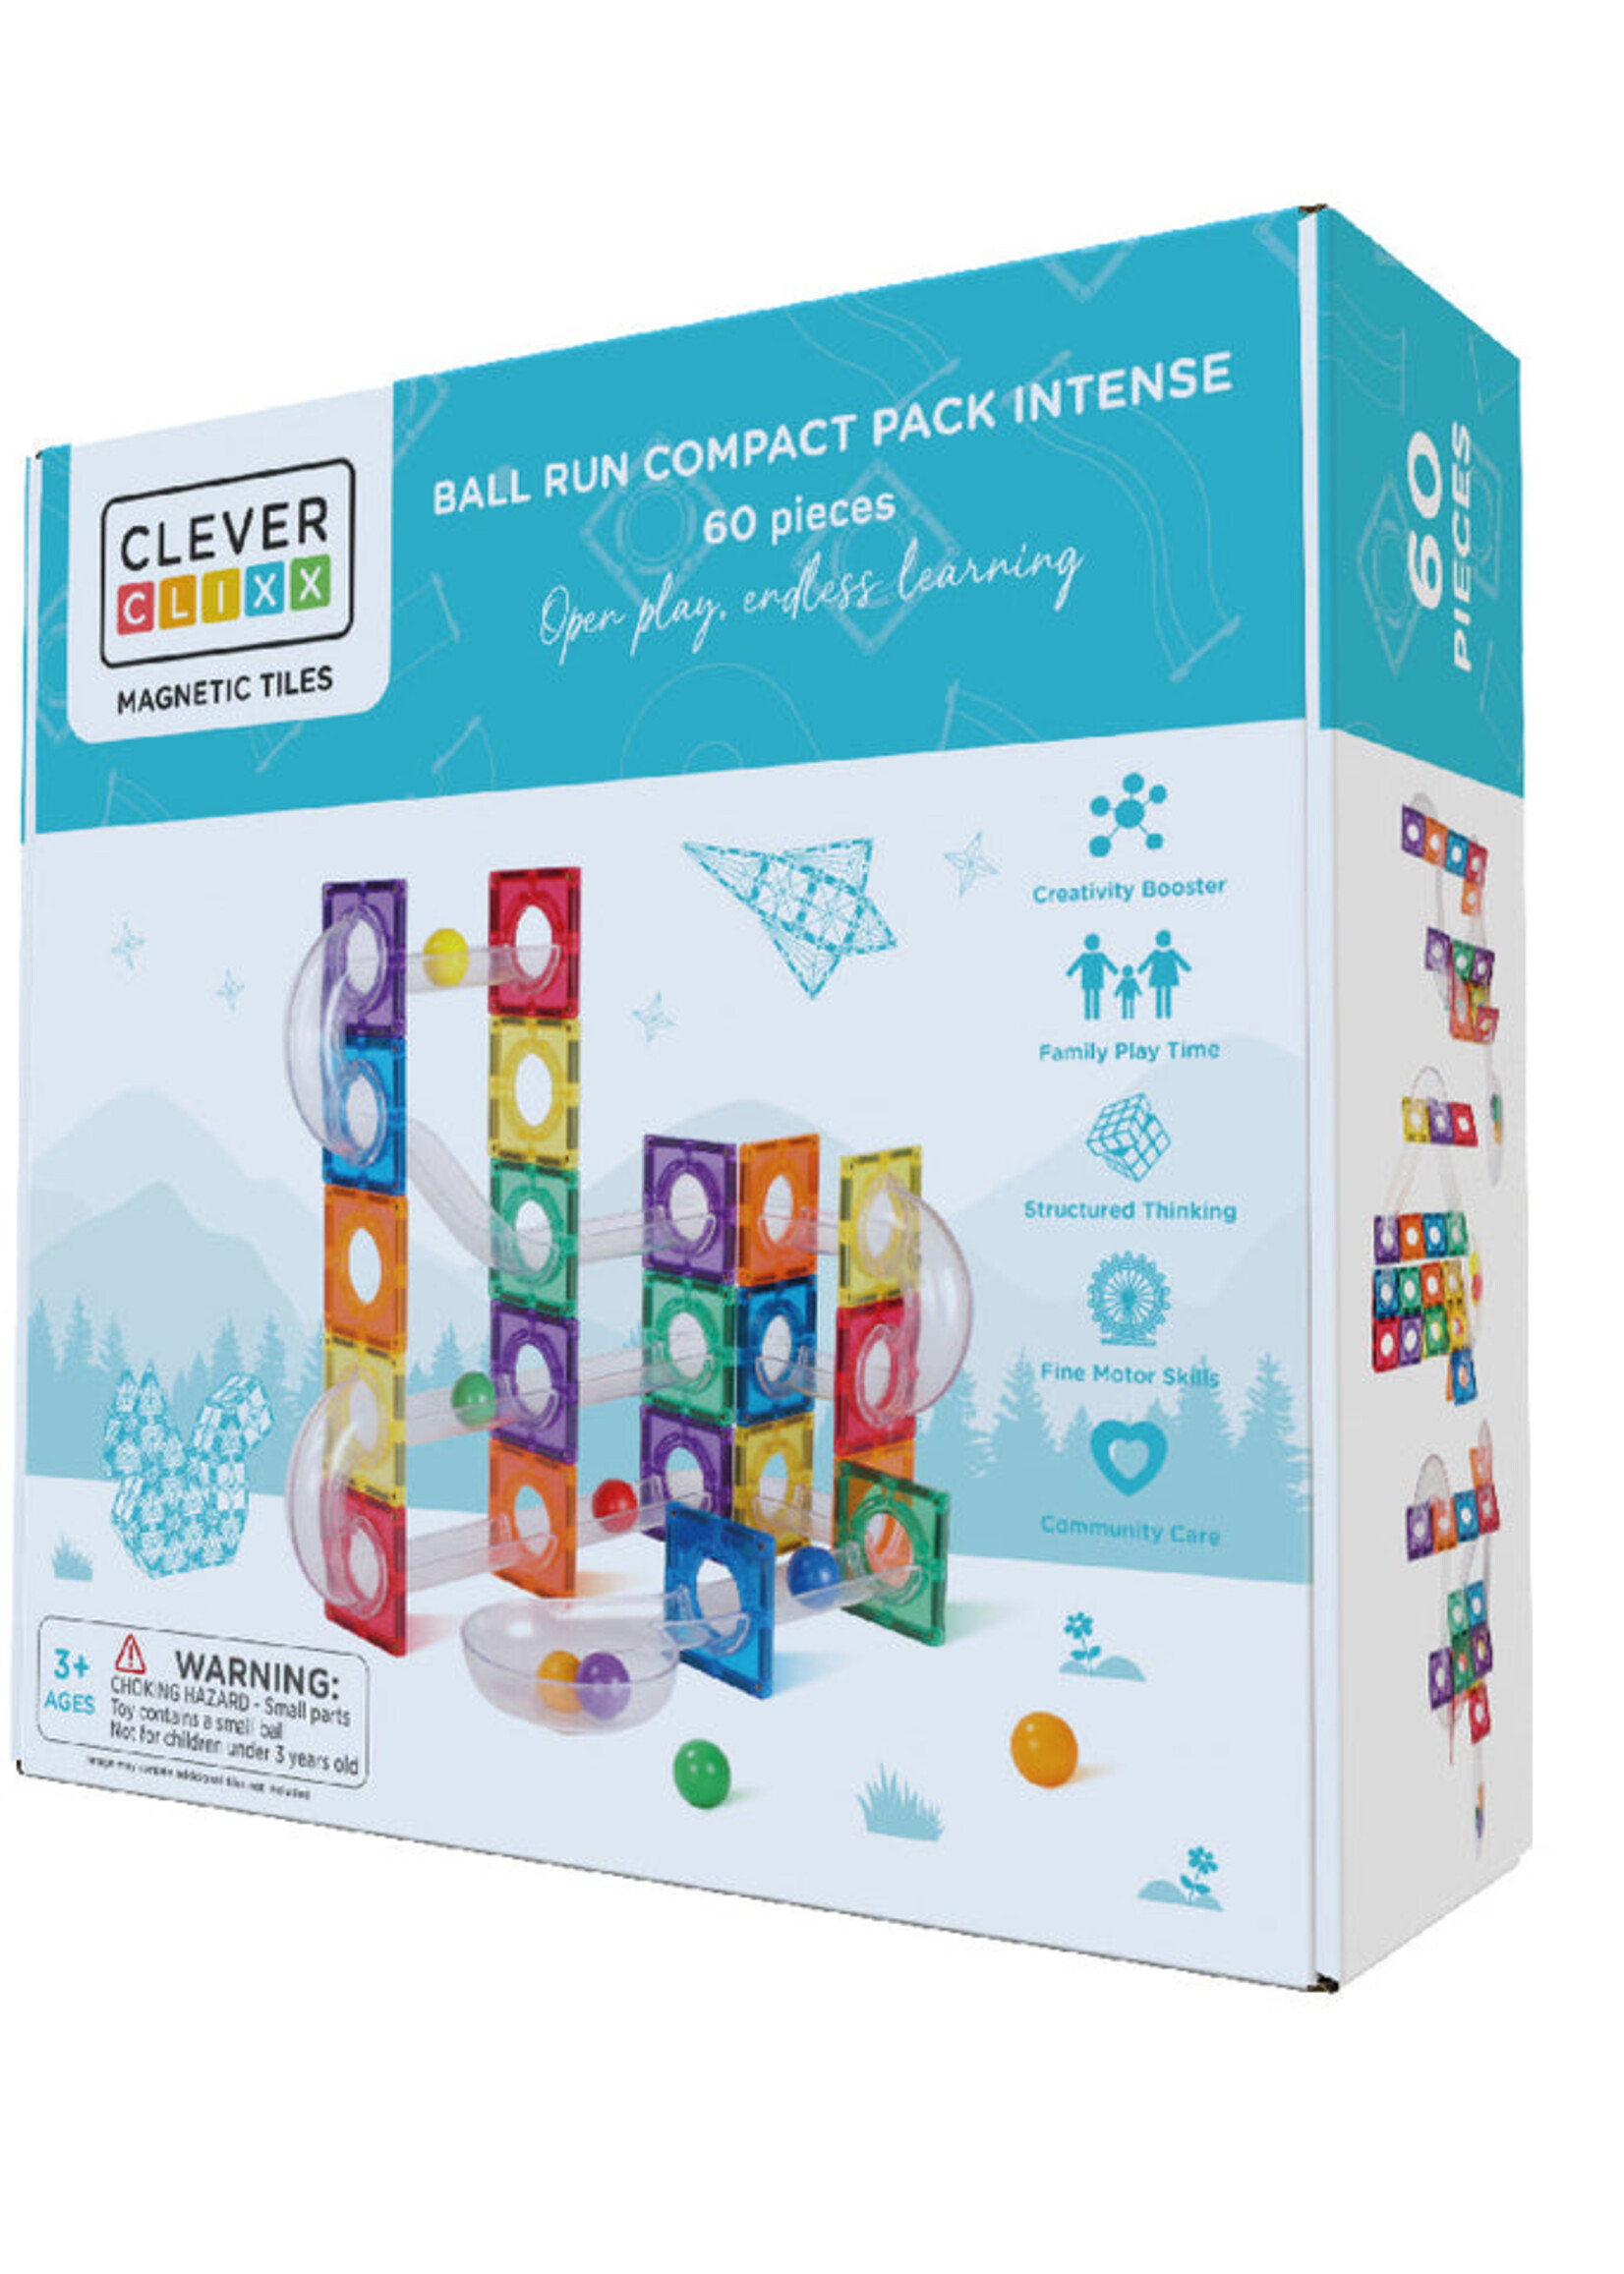 Cleverclixx Cleverclixx | Ball Run Copact Pack Intense - 60 pieces